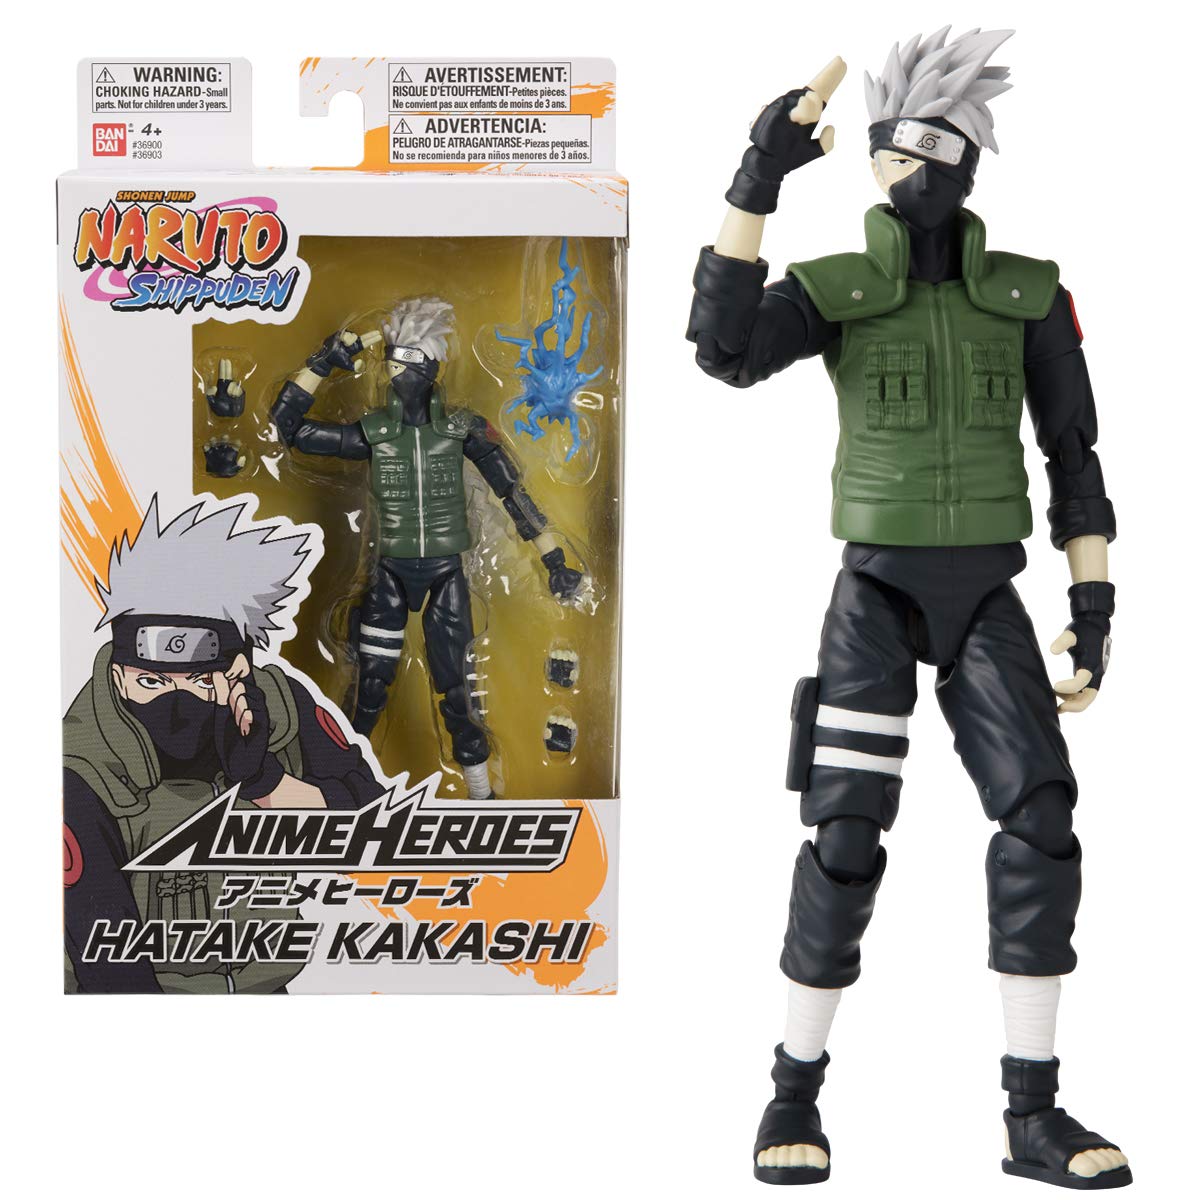 Mua Anime Heroes Bandai 36903 Naruto 15cm Hatake Kakashi-Action Figures  trên Amazon Anh chính hãng 2023 | Giaonhan247